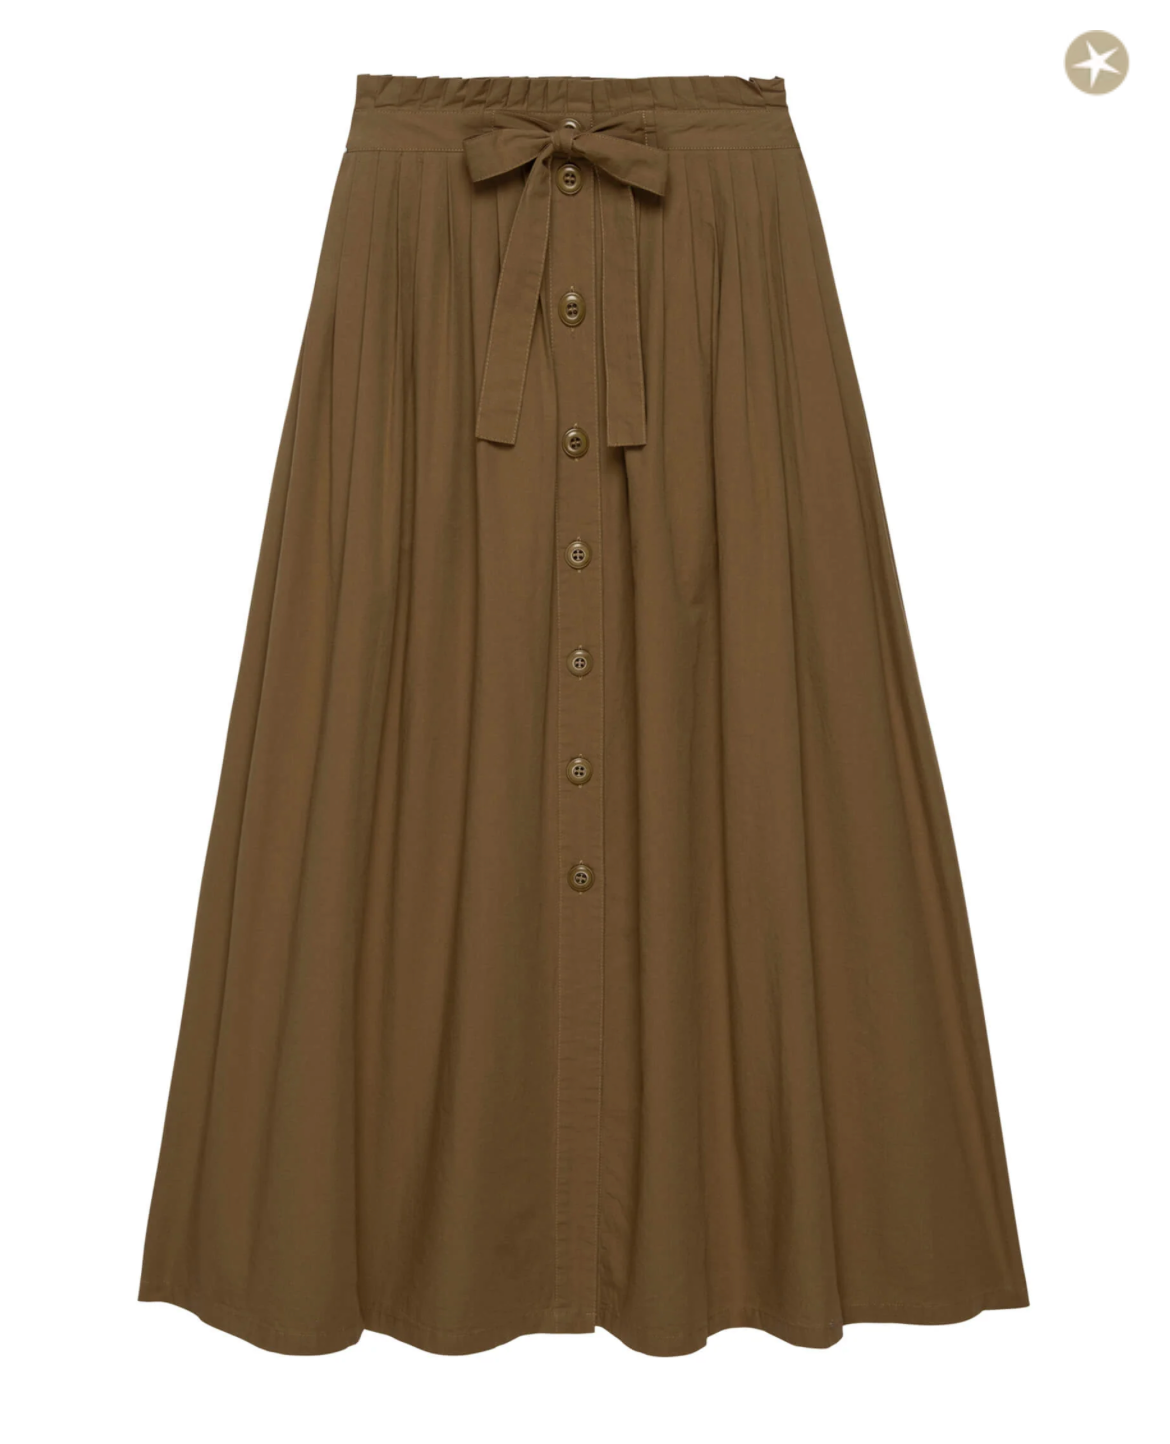 The Treeline Skirt. Suntan